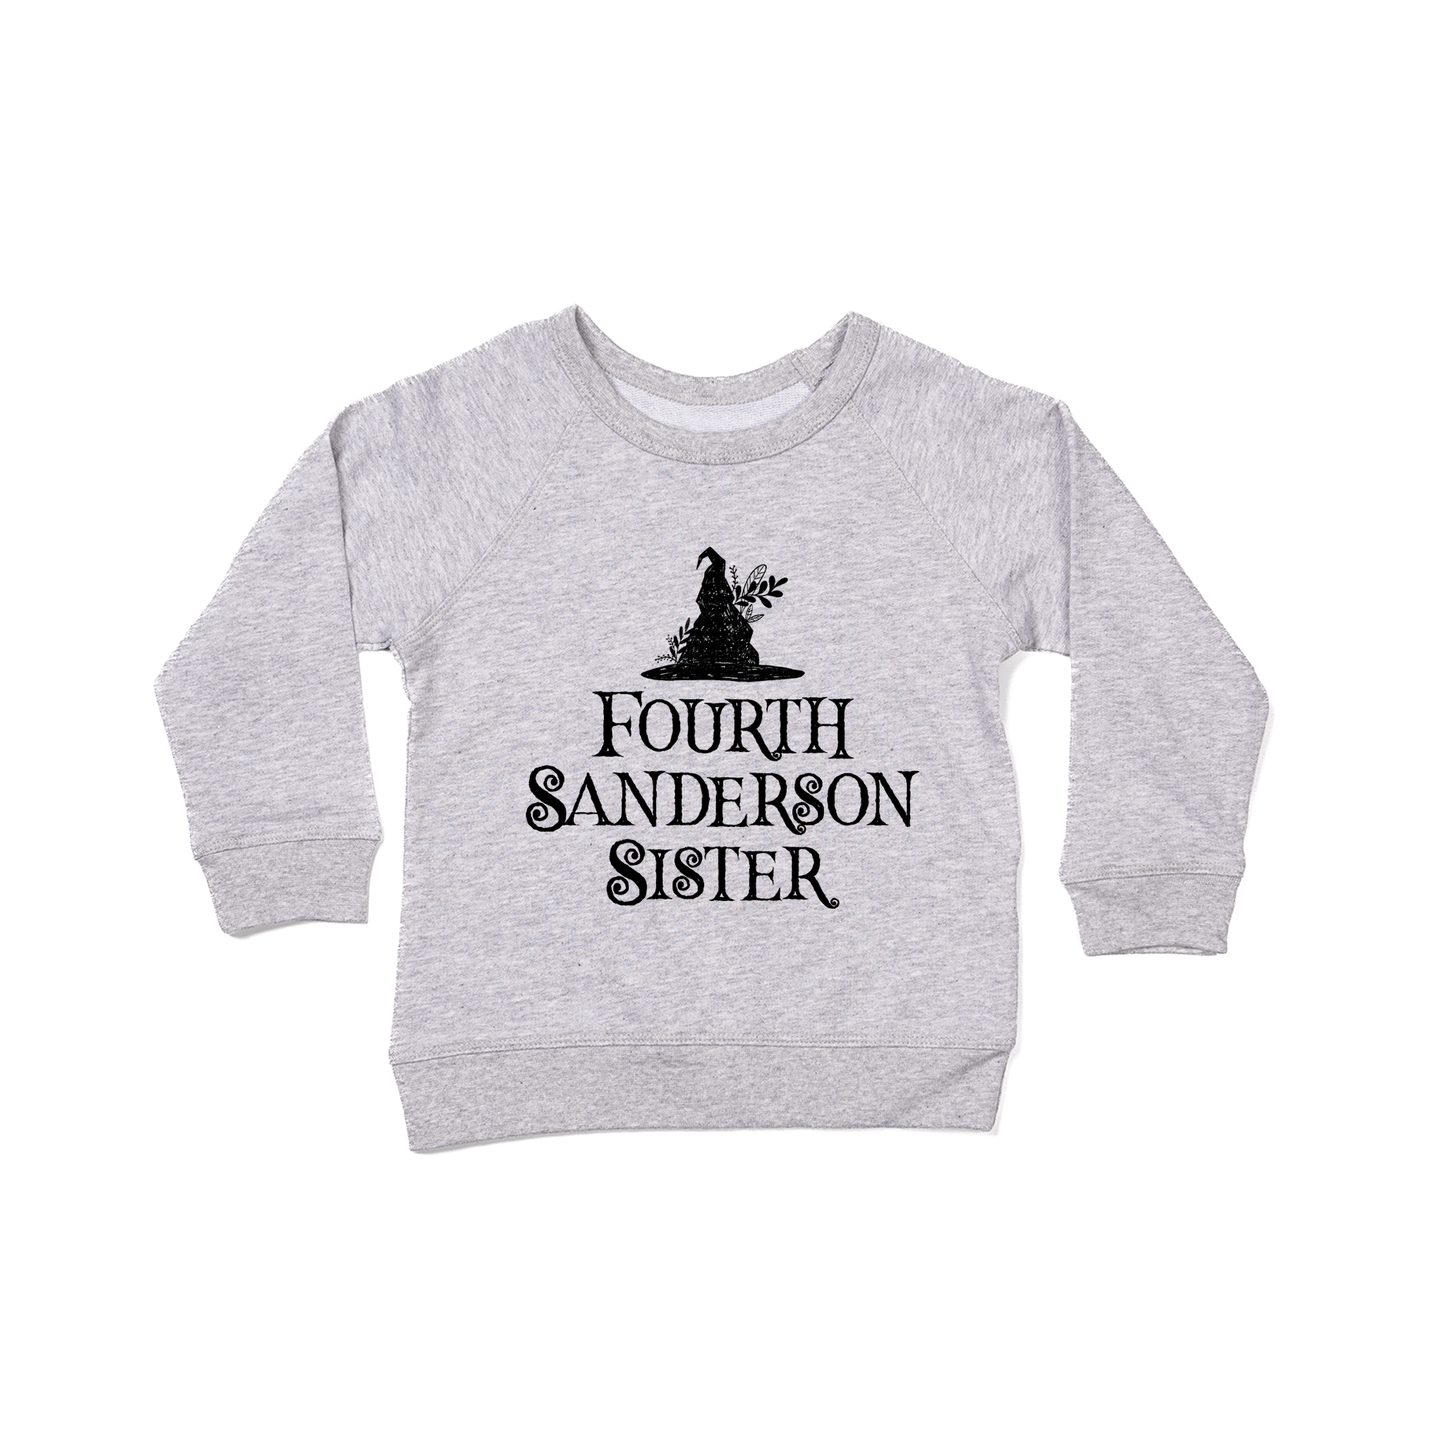 Fourth Sanderson Sister (Black) - Kids Sweatshirt (Heather Gray)